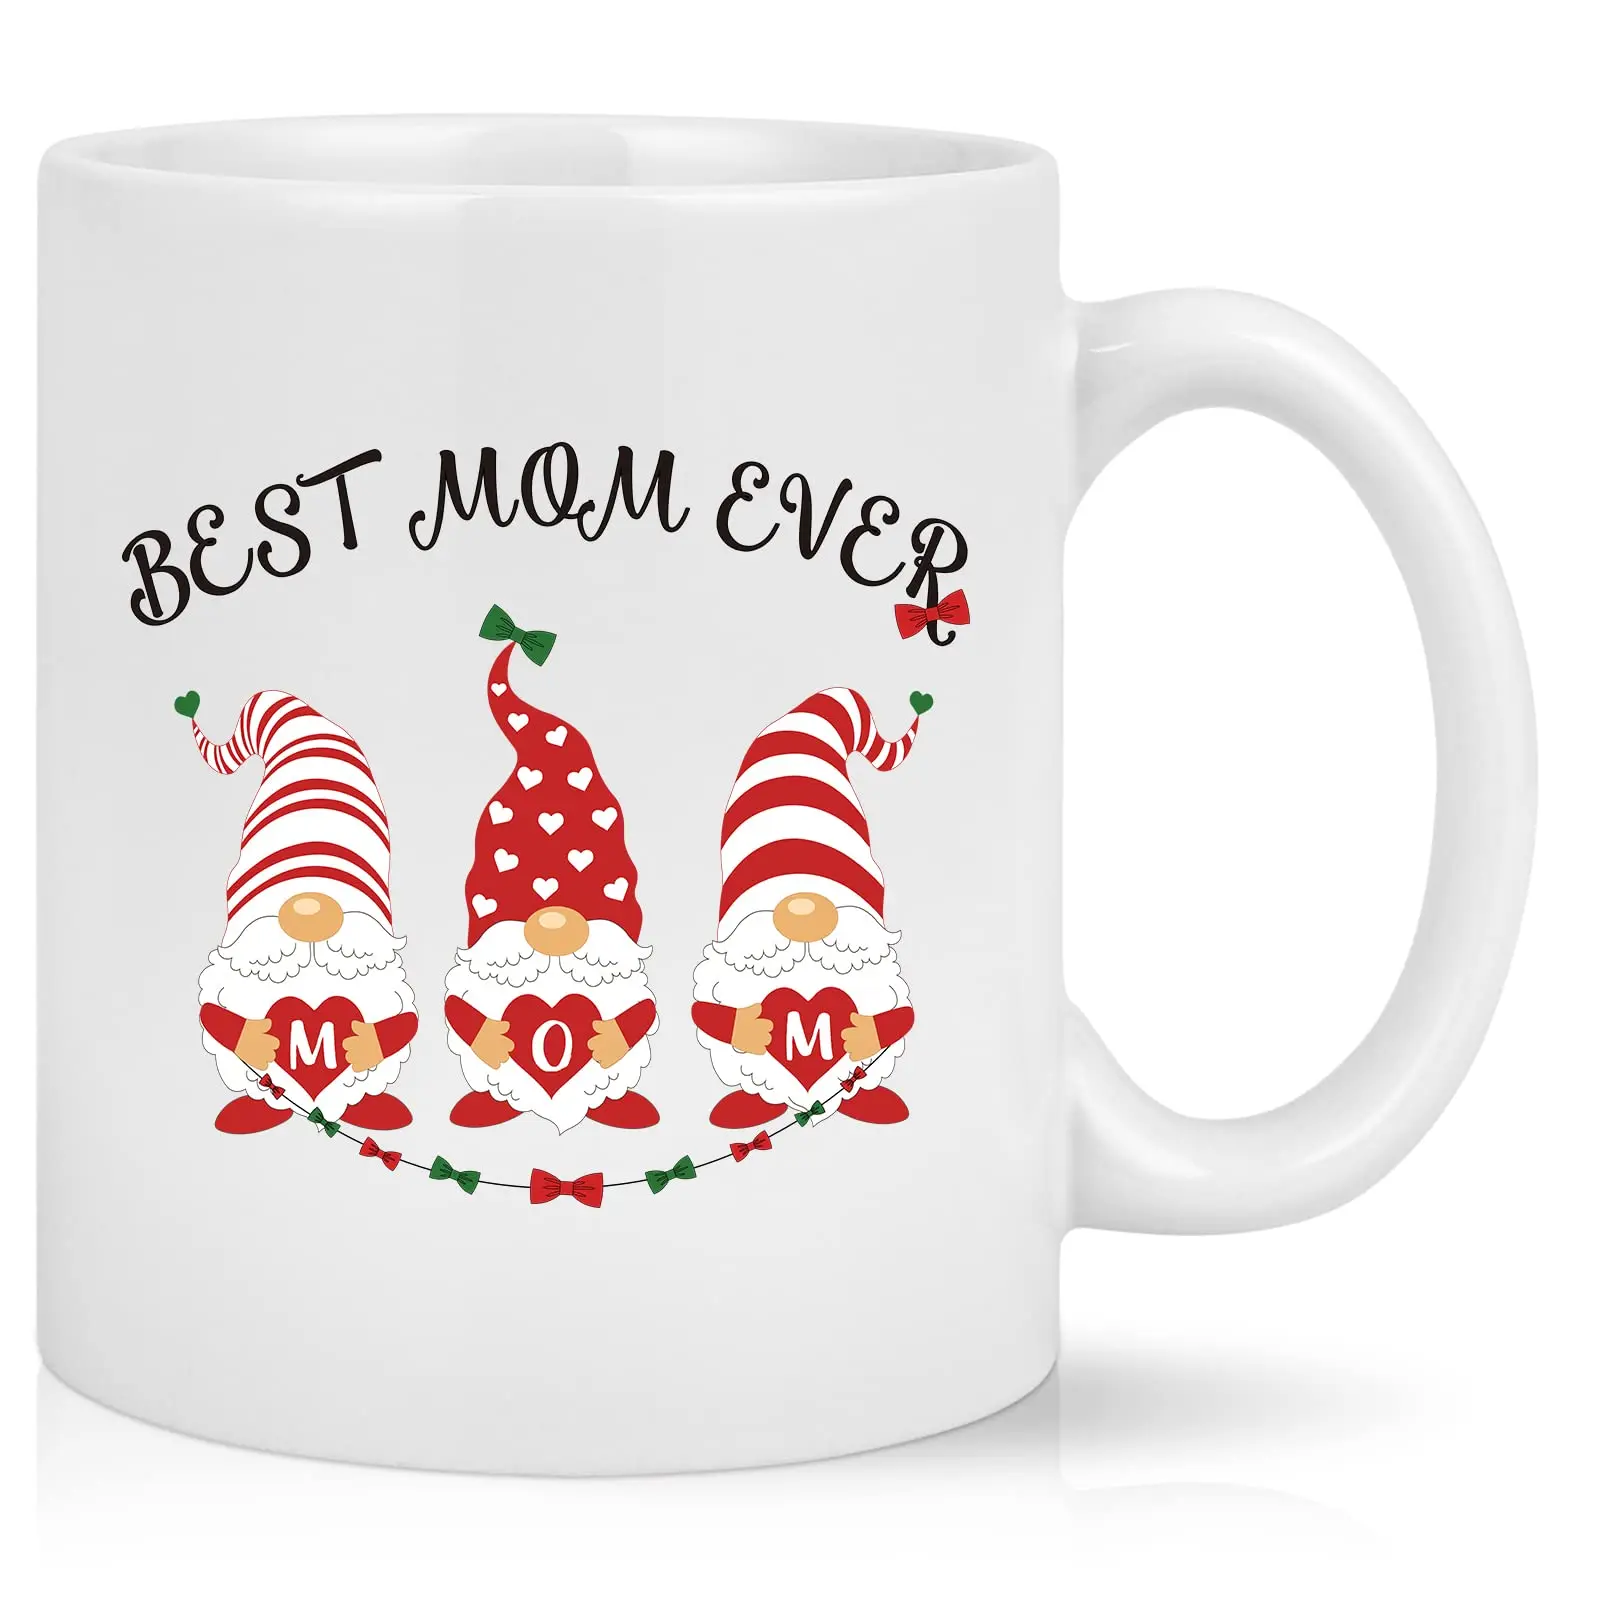 

Gifts For Mom And Dad Ceramic Mug Christmas Mugs Christmas And New Year's Day Custom Mugs Coffee Cups Mug With Lettering Cup Bar